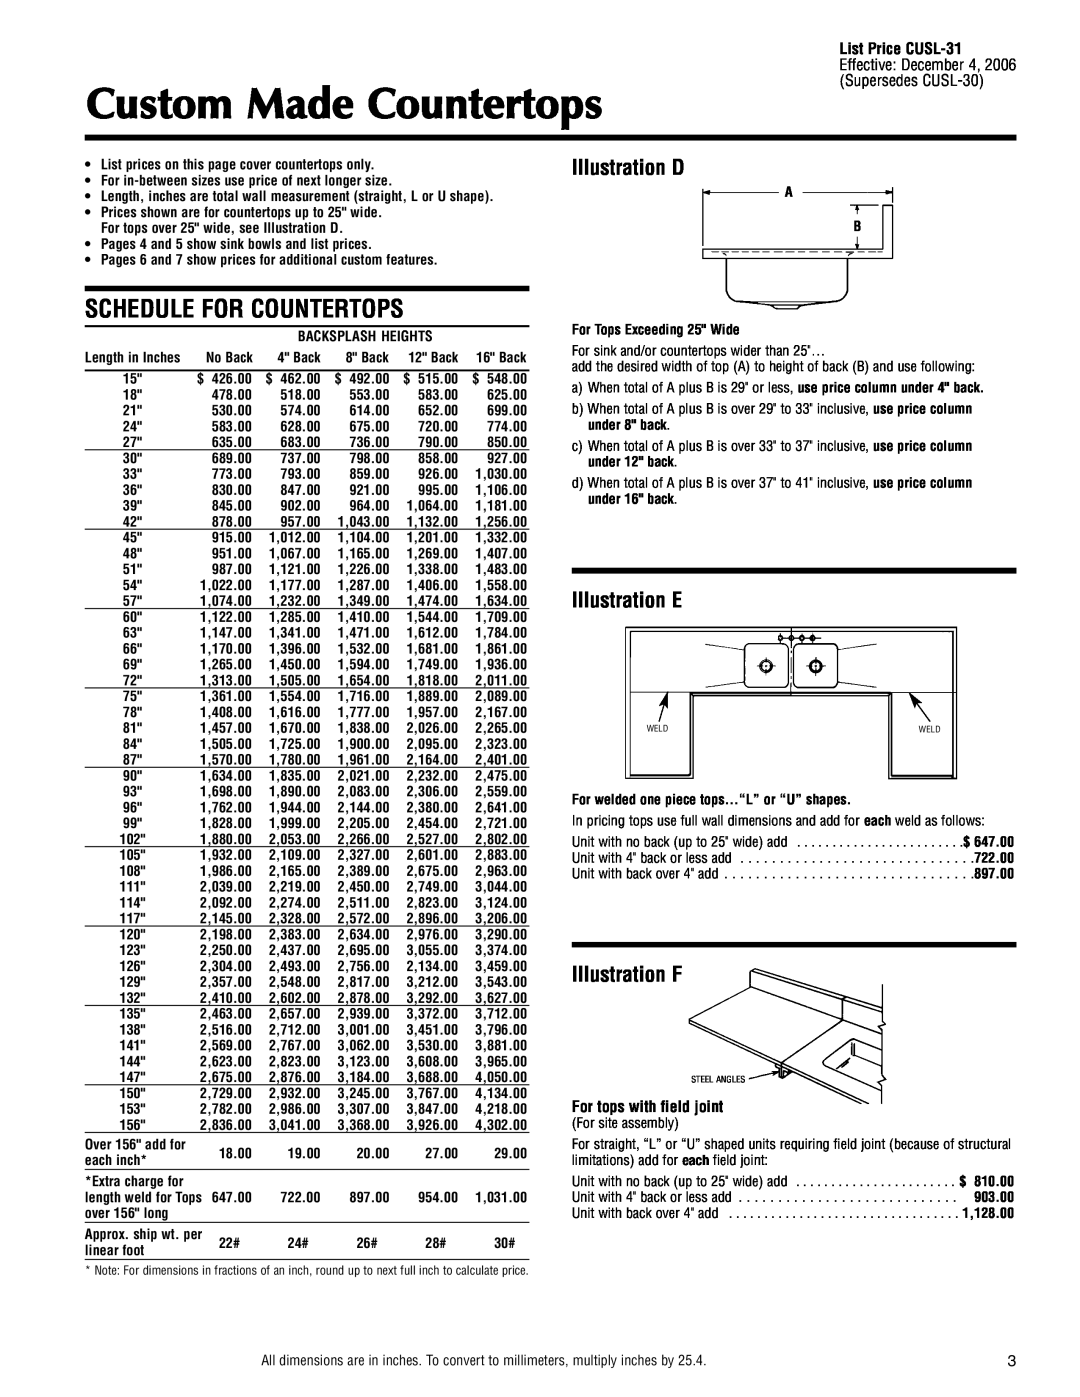 Elkay CUSL-31 Custom Made Countertops, Schedule For Countertops, Illustration D, Illustration E, Illustration F 